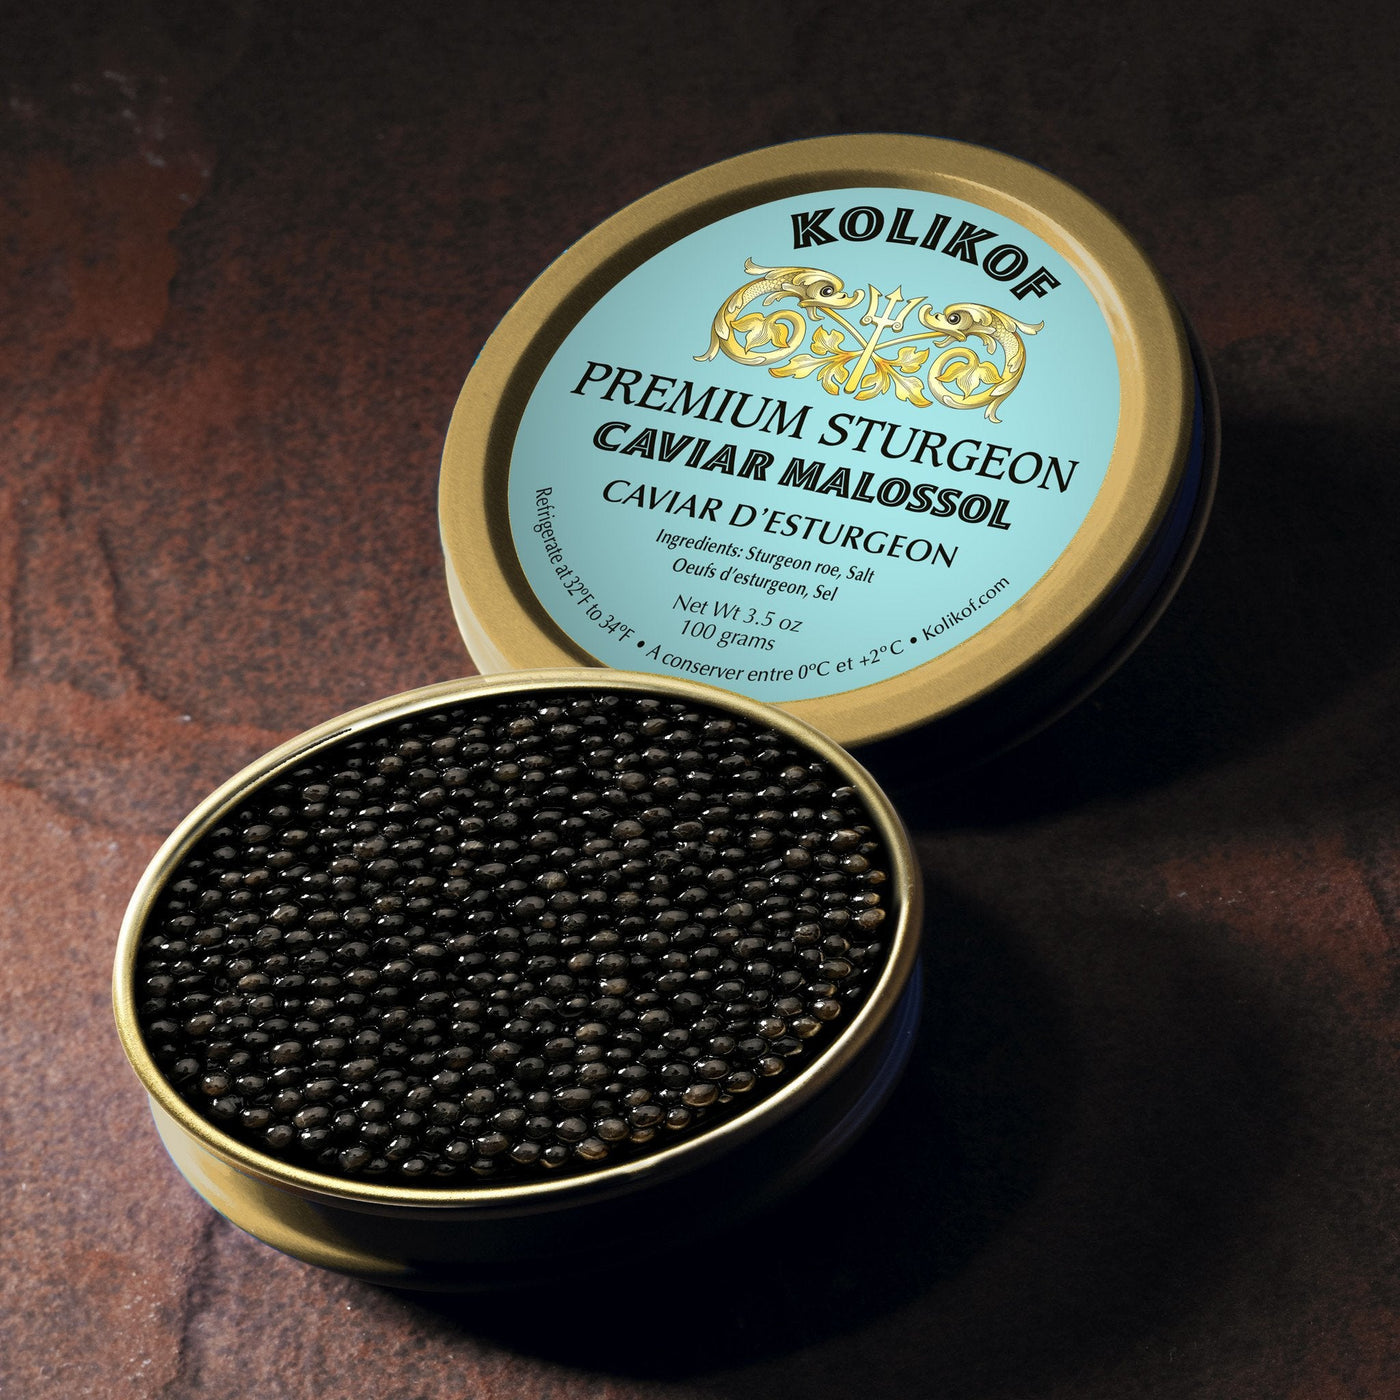 Caviar for beginners‰Û҉ÛÒPremium Sturgeon is reasonable priced yet its taste is extraordinary